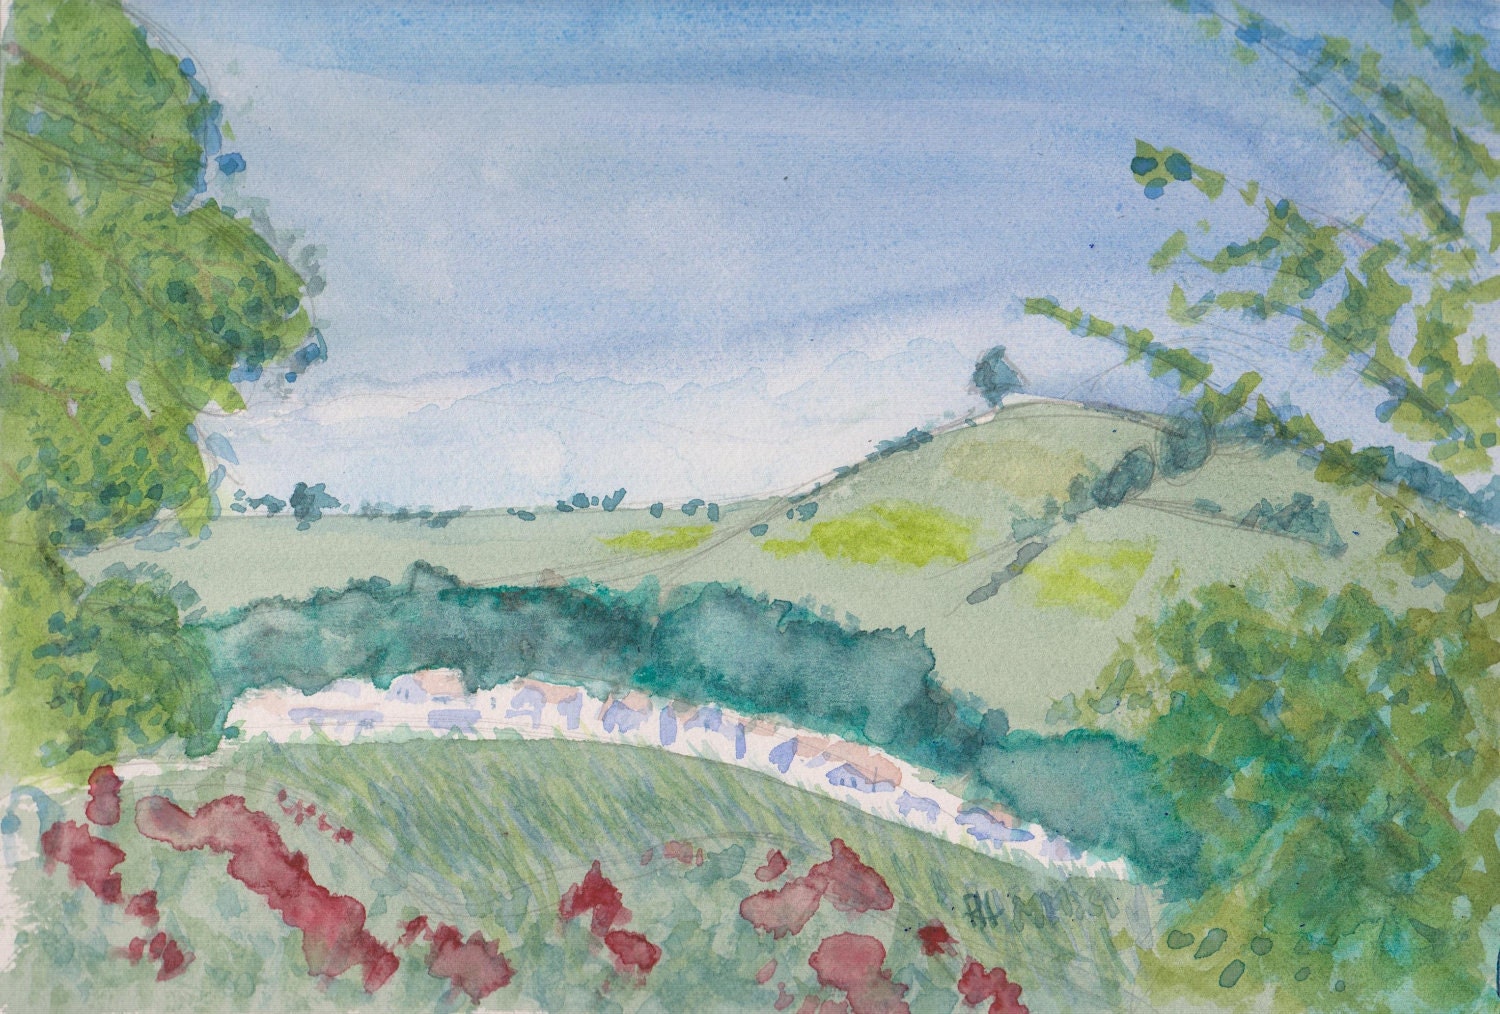 Spring Day Valley watercolor landscape print - AzulBlueDragon